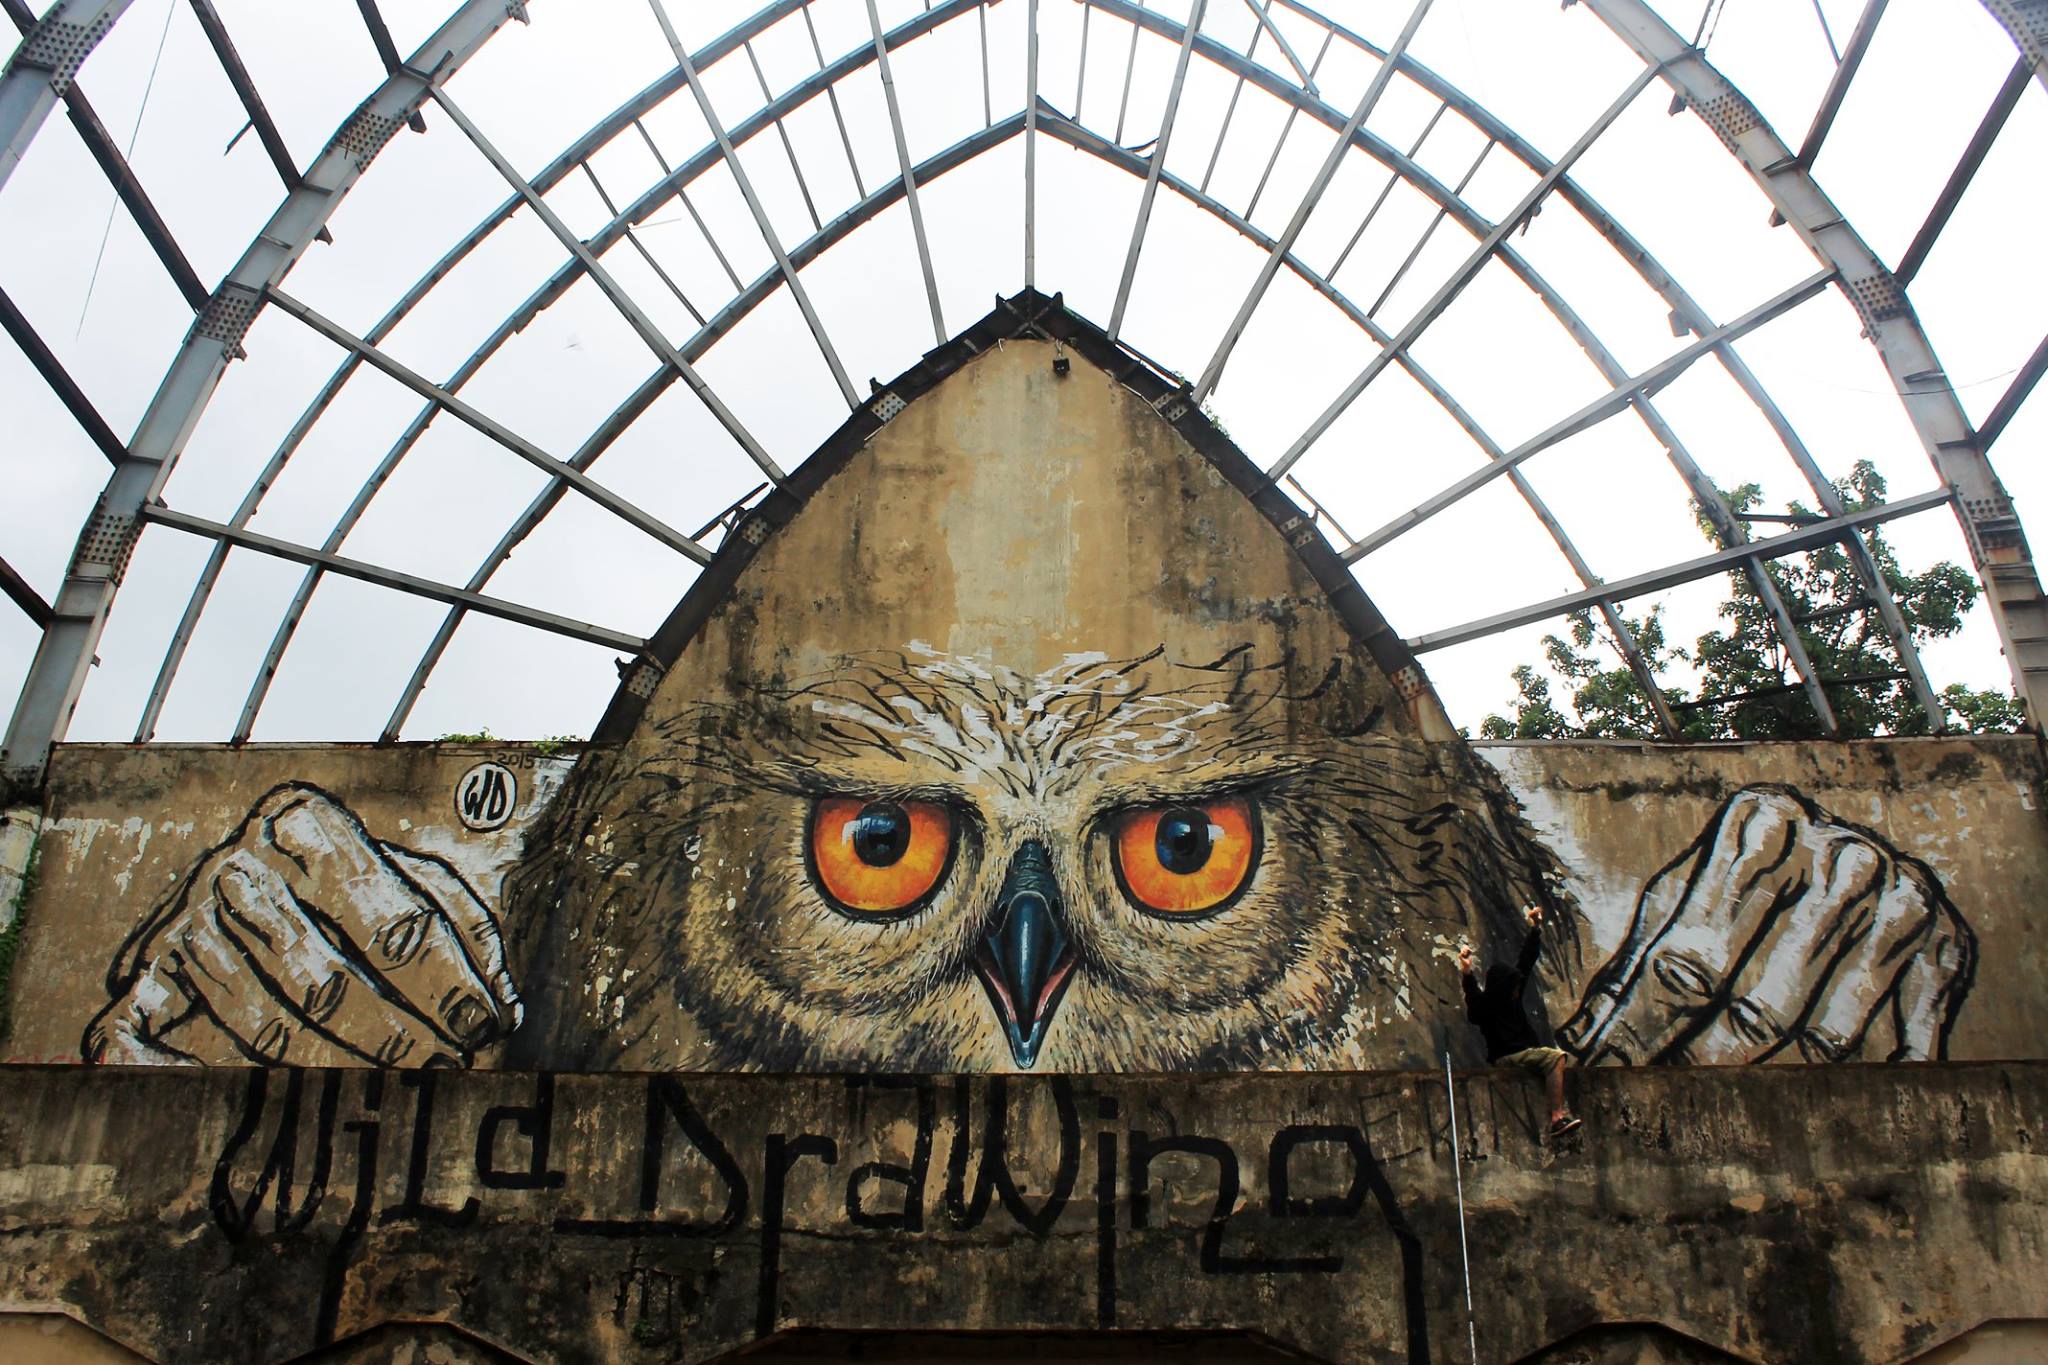 Street Art by Wild Drawing 2015 - Owlself in Bali, Indonesia